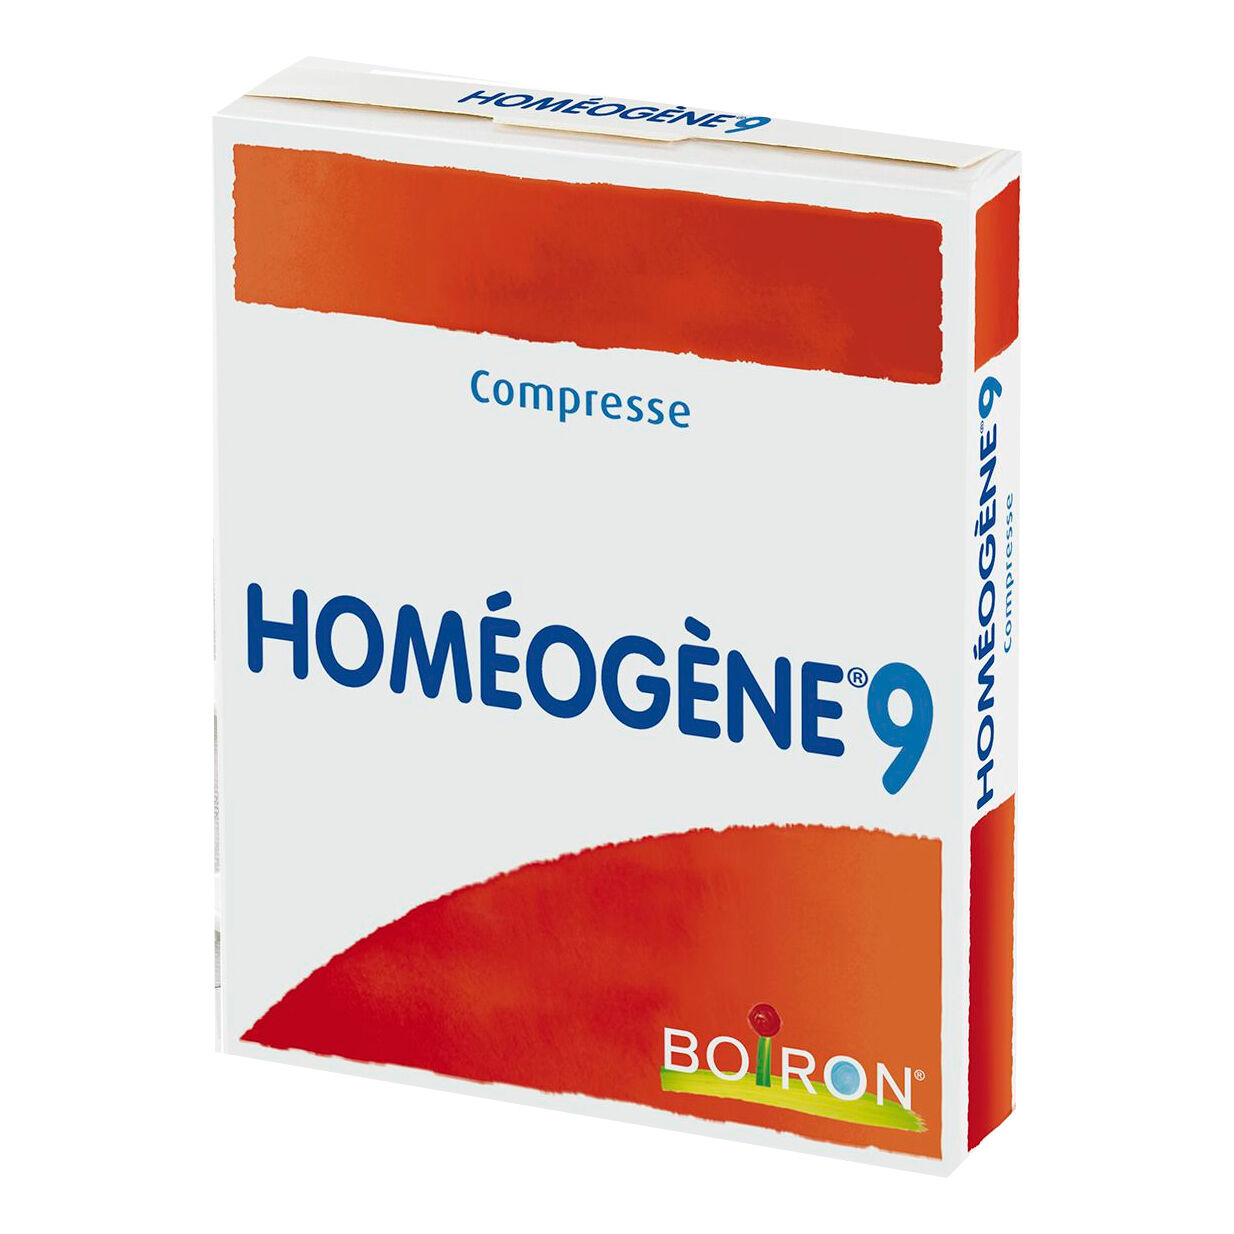 BOIRON Bo.homeogene 9 cpr